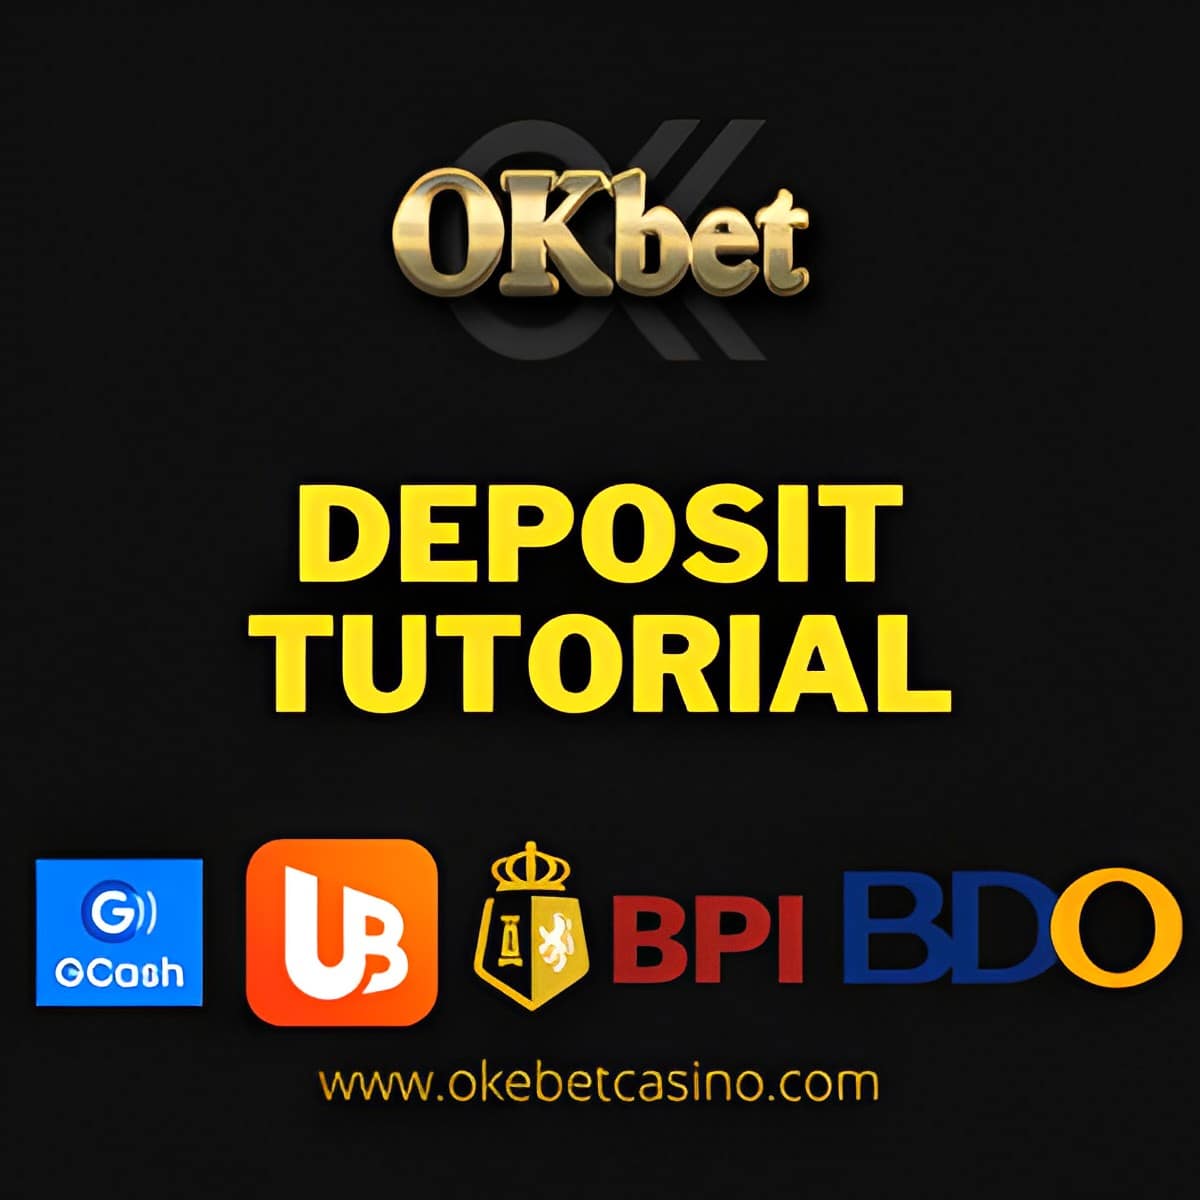 OKE-BET (OKBet) Deposit Options: